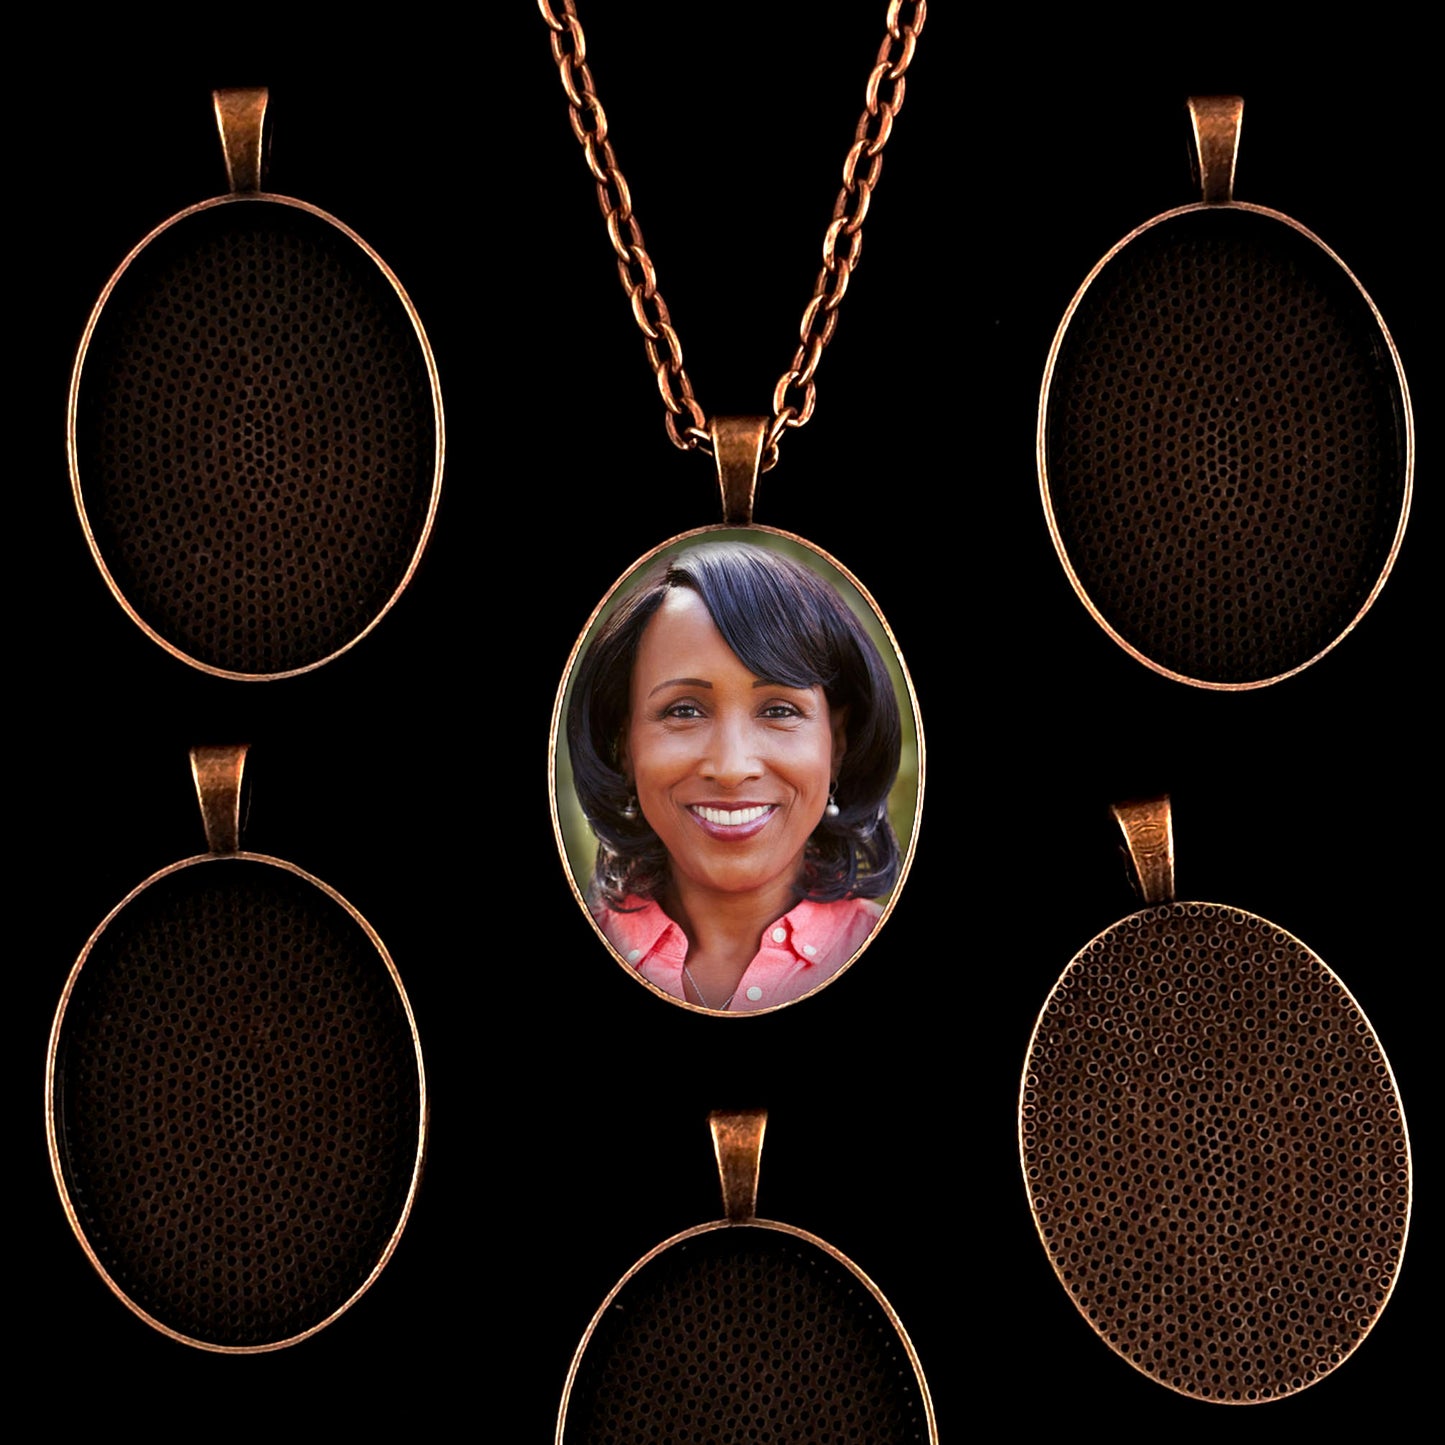 Mega Kit Photo Necklaces with 22x30mm 1"x1 1/4" Copper Oval Photo Pendants